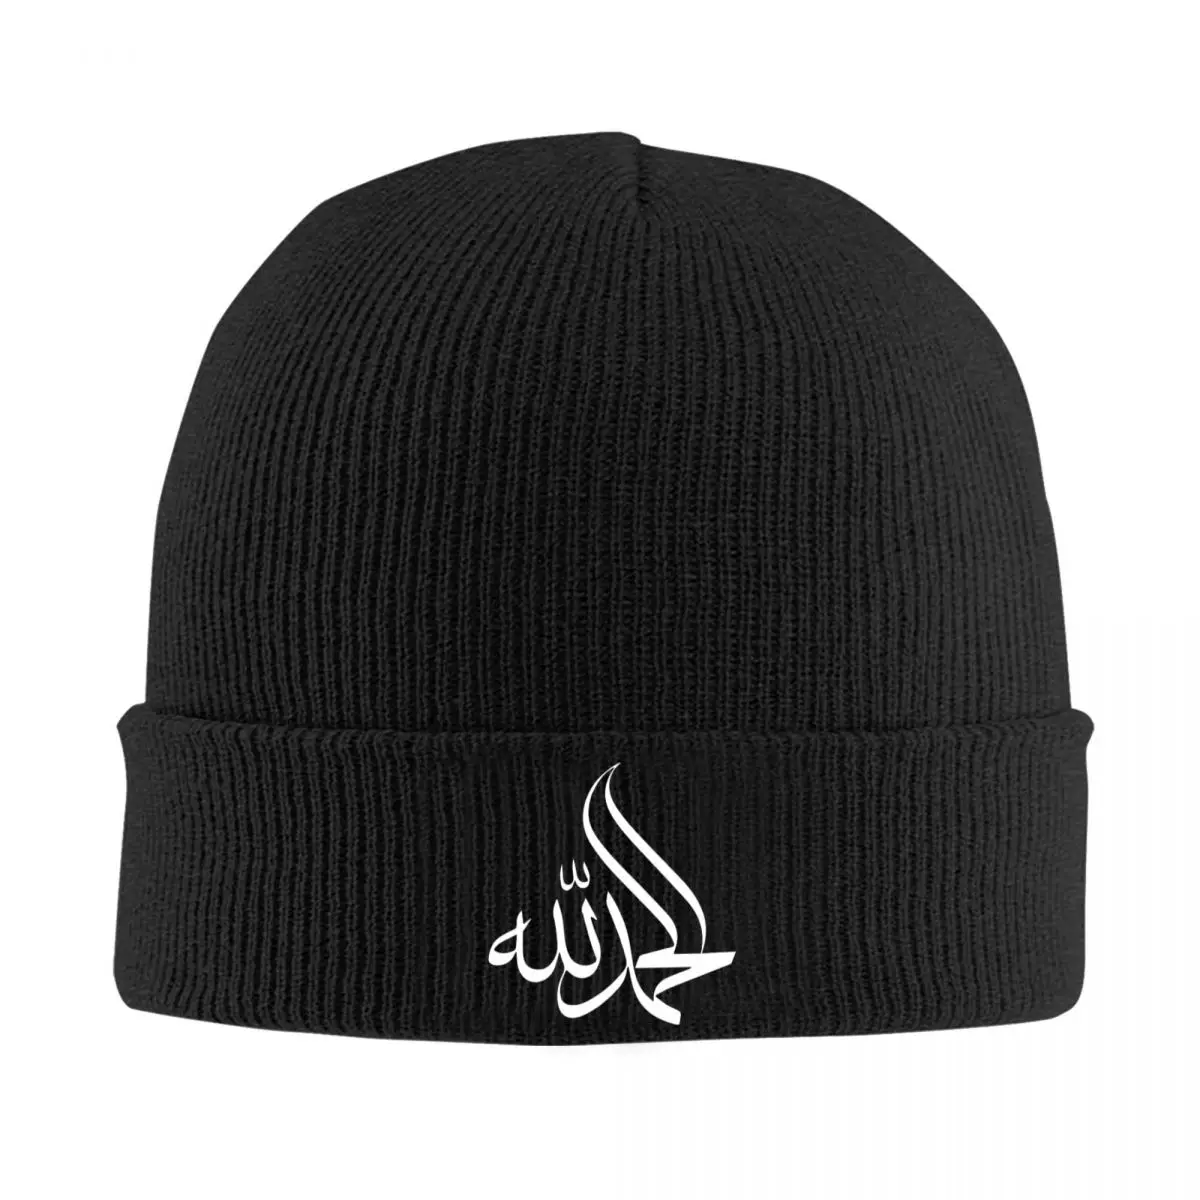 

Islamic Calligraphy Arabic Alhamdulillah Praise Allah Muslim 33 Bonnet Hat Knitting Hats Unisex Adult Warm Winter Beanies Cap